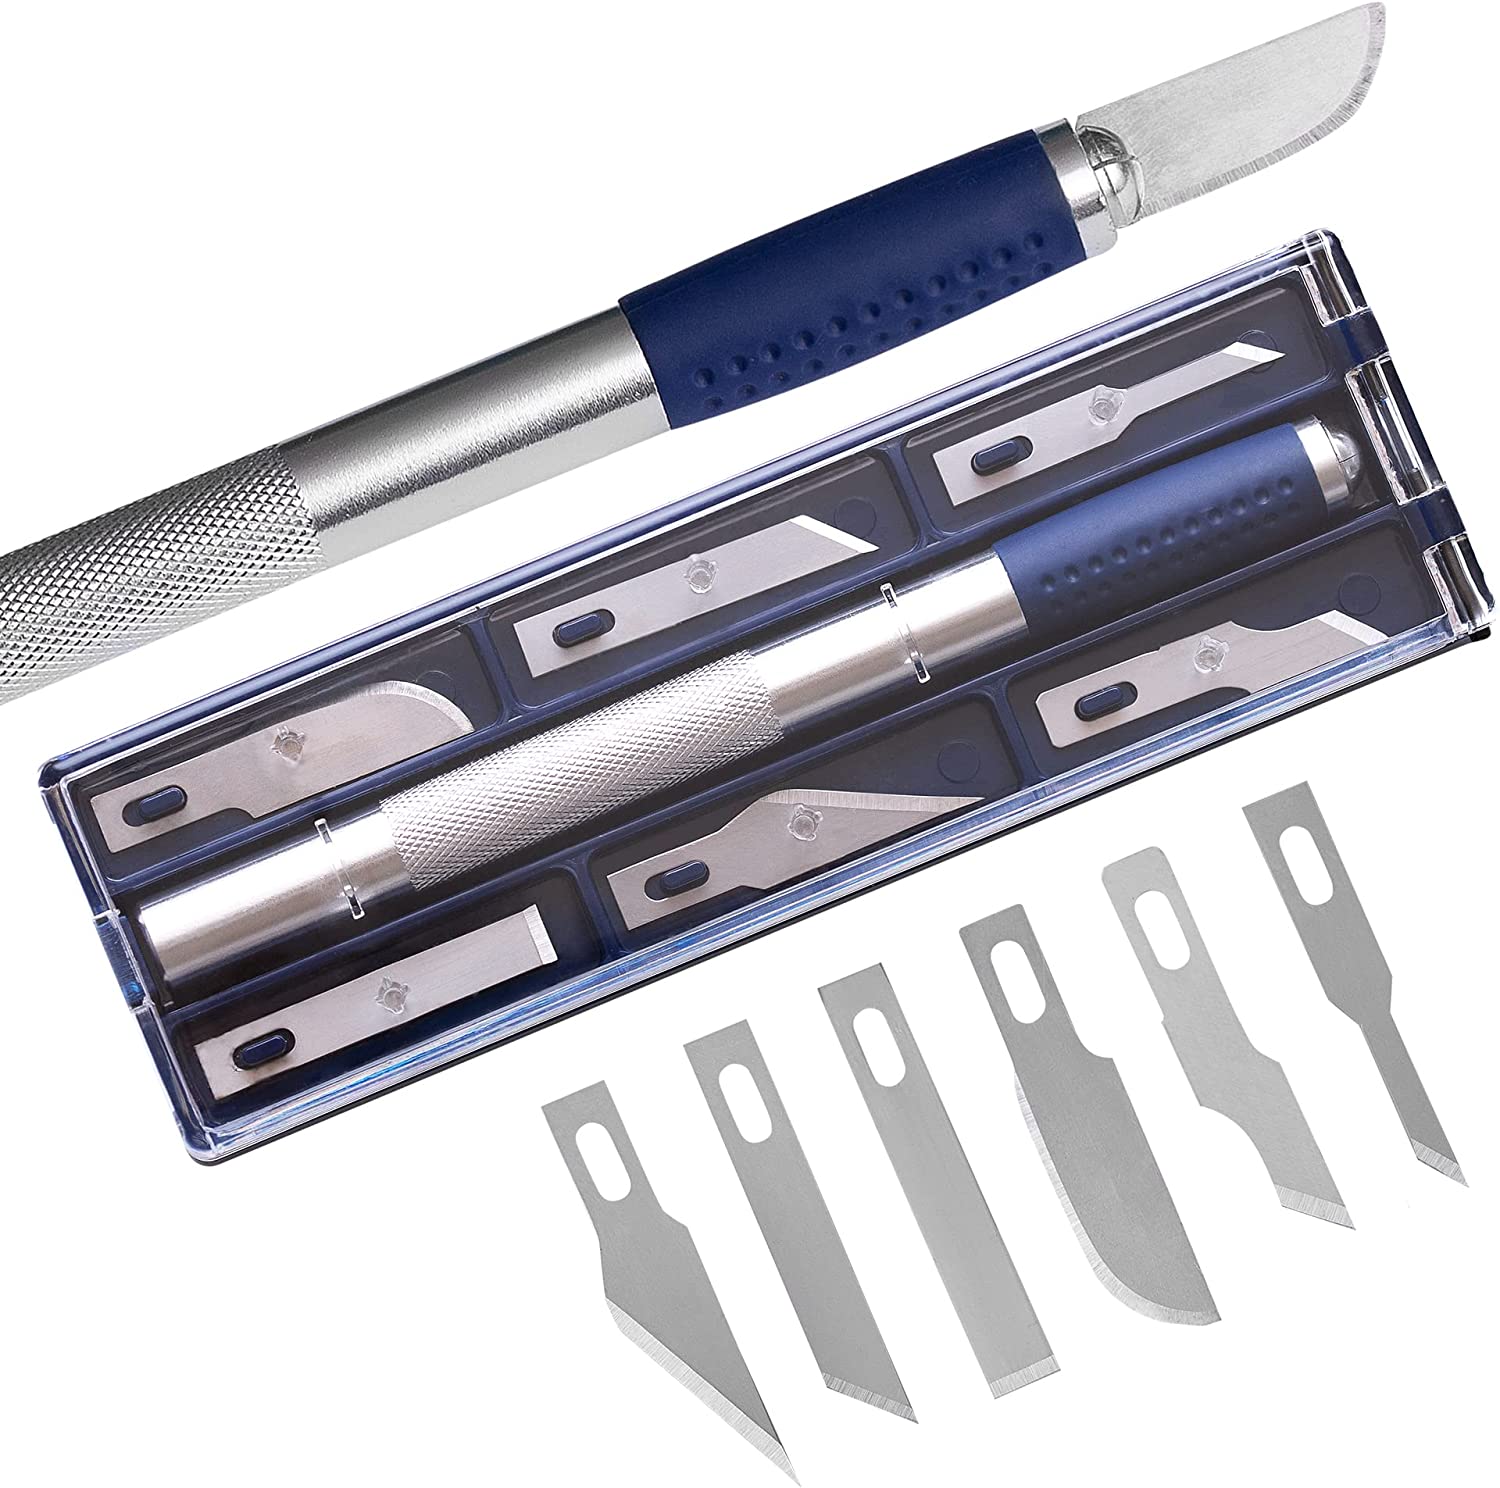 DIYSELF Exacto Knife Upgrade Precision Carving Craft Knife Hobby